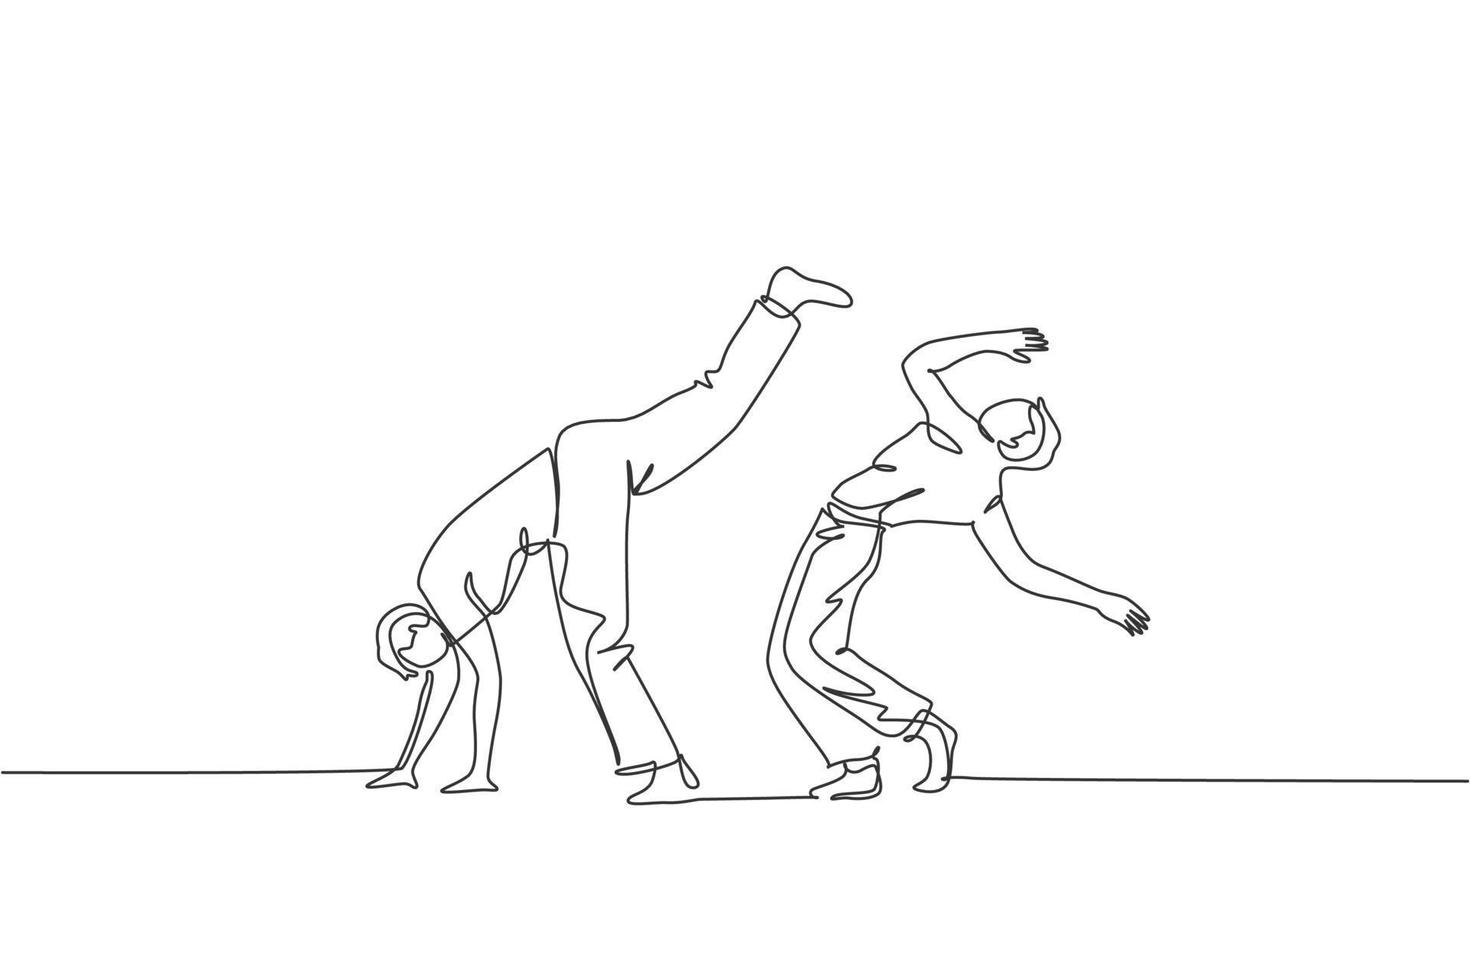 en enda linjeteckning av två unga energiska man capoeira dansare utför dans kamp vektorillustration. traditionell kampsport livsstil sport koncept. modern kontinuerlig linjeritningsdesign vektor